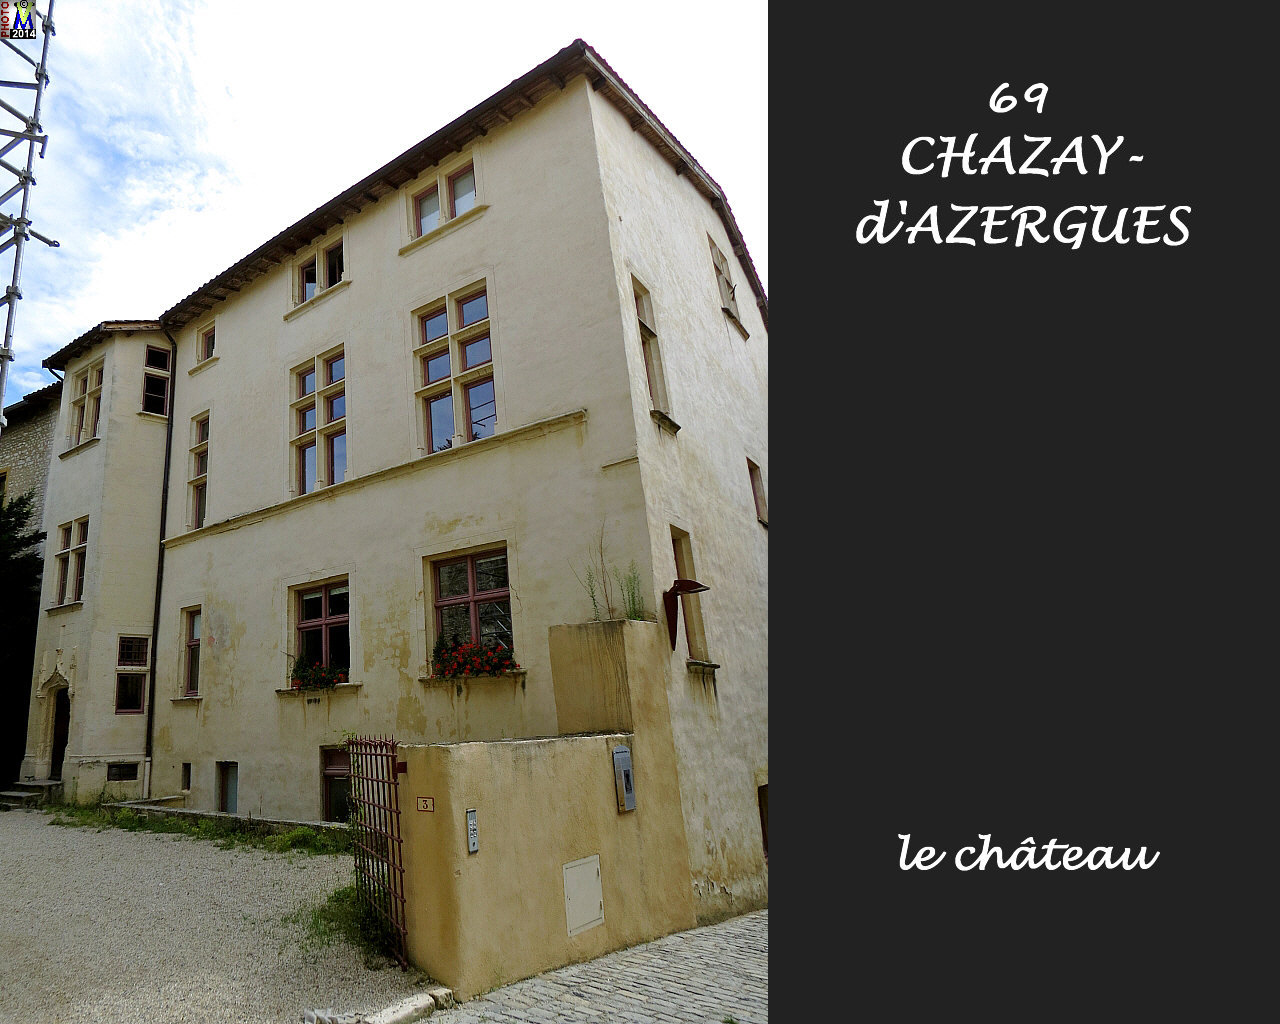 69CHAZAY-AZERGUES_chateau_106.jpg